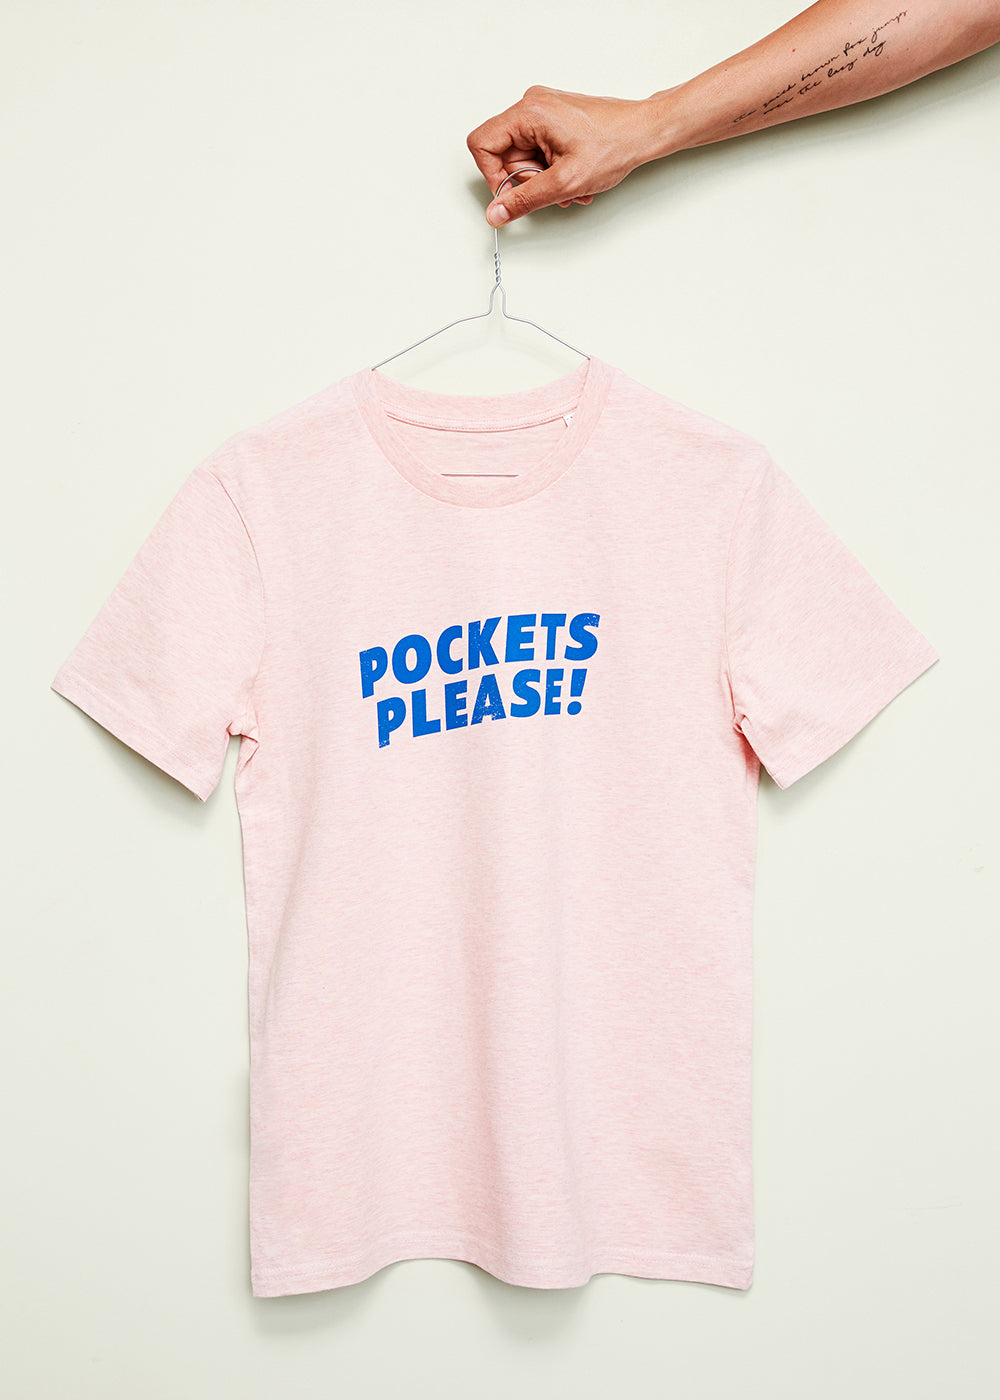 Pockets please T-shirt, light pink, voksen